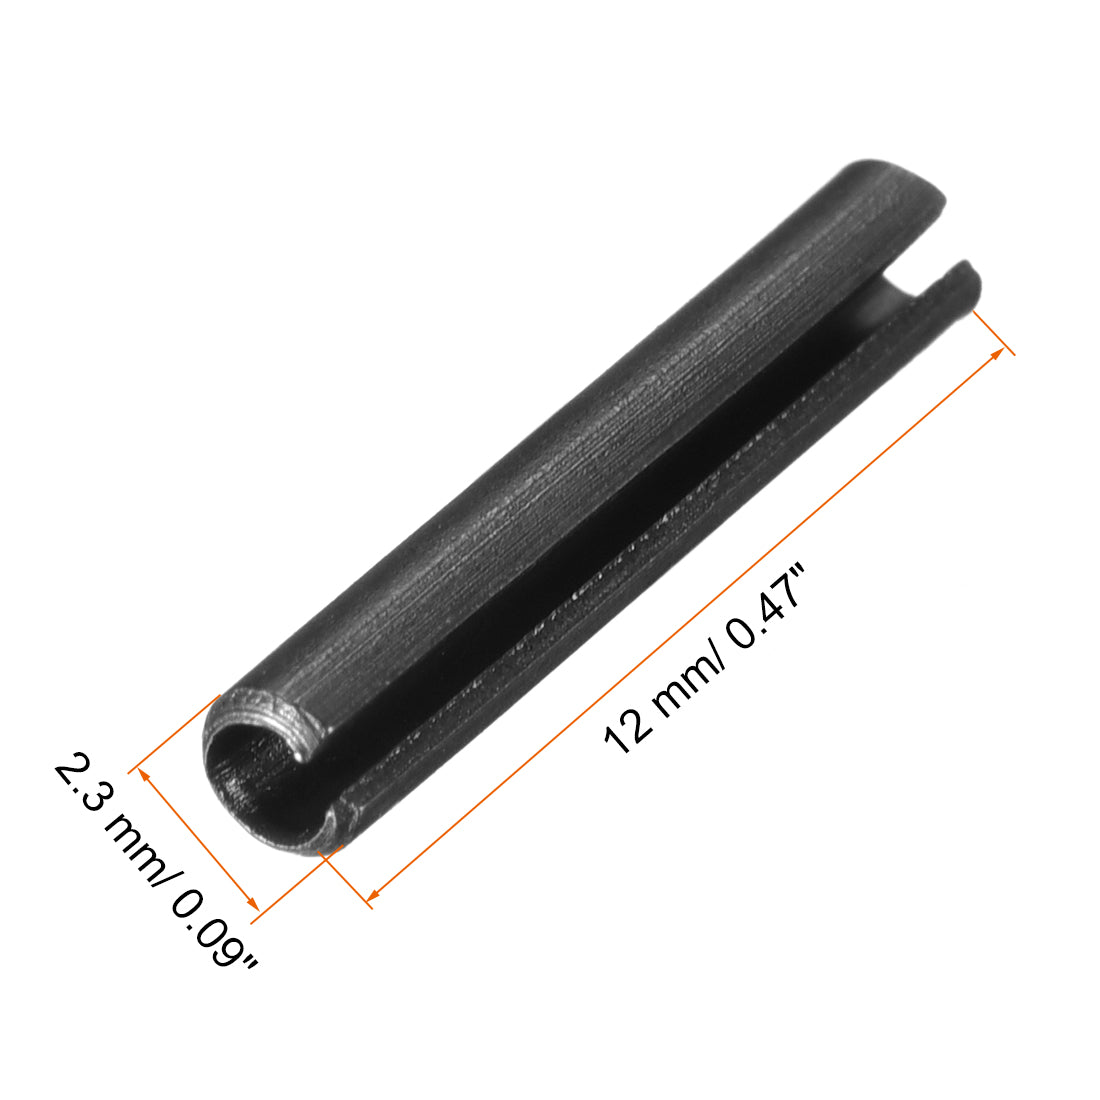 uxcell Uxcell 2.3mm x 12mm Dowel Pin Carbon Steel Split Spring Roll Shelf Support Pin Fasten Hardware Black 20 Pcs